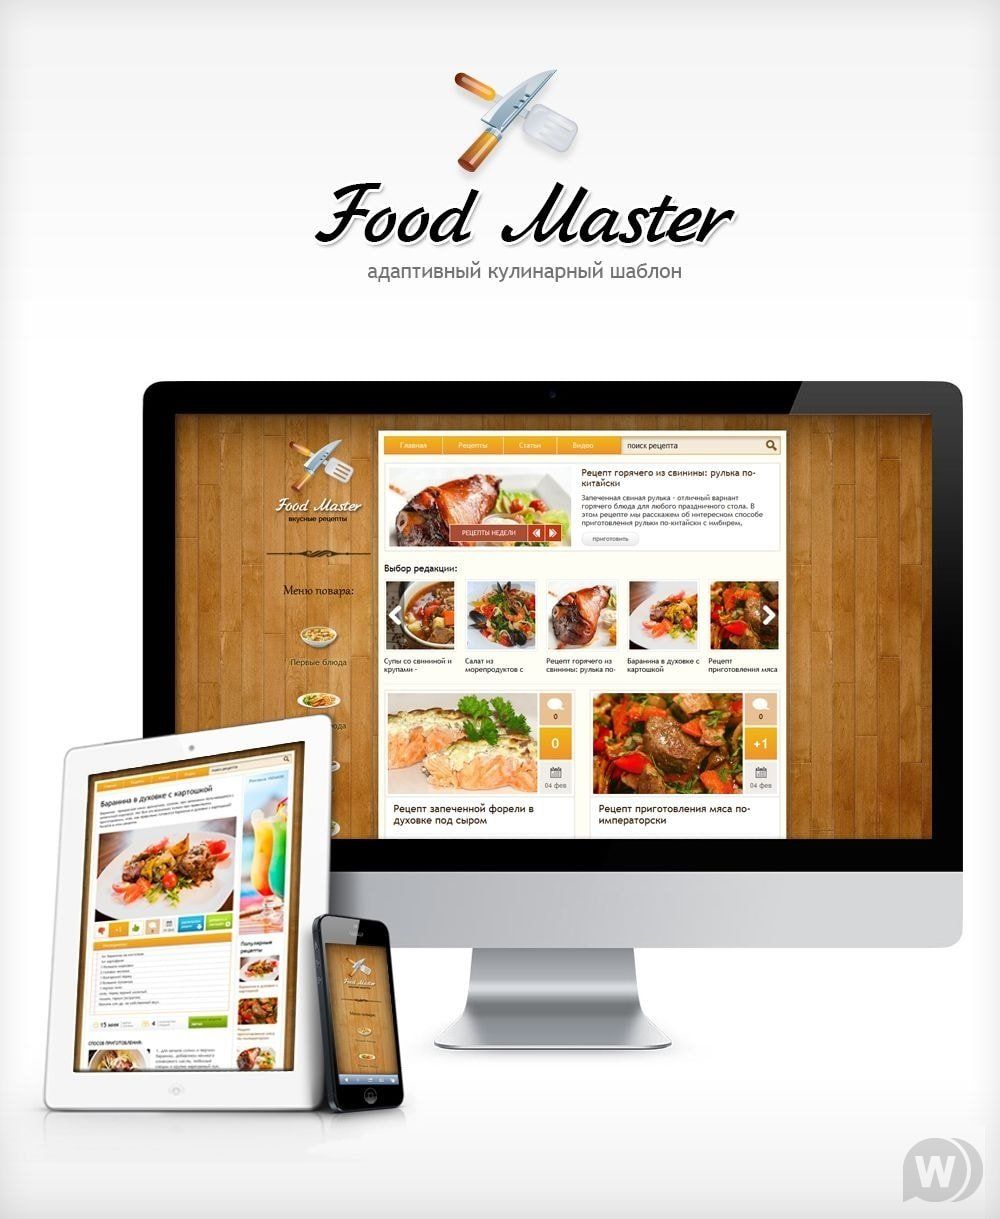 Food Master - кулинарный шаблон для DLE 12